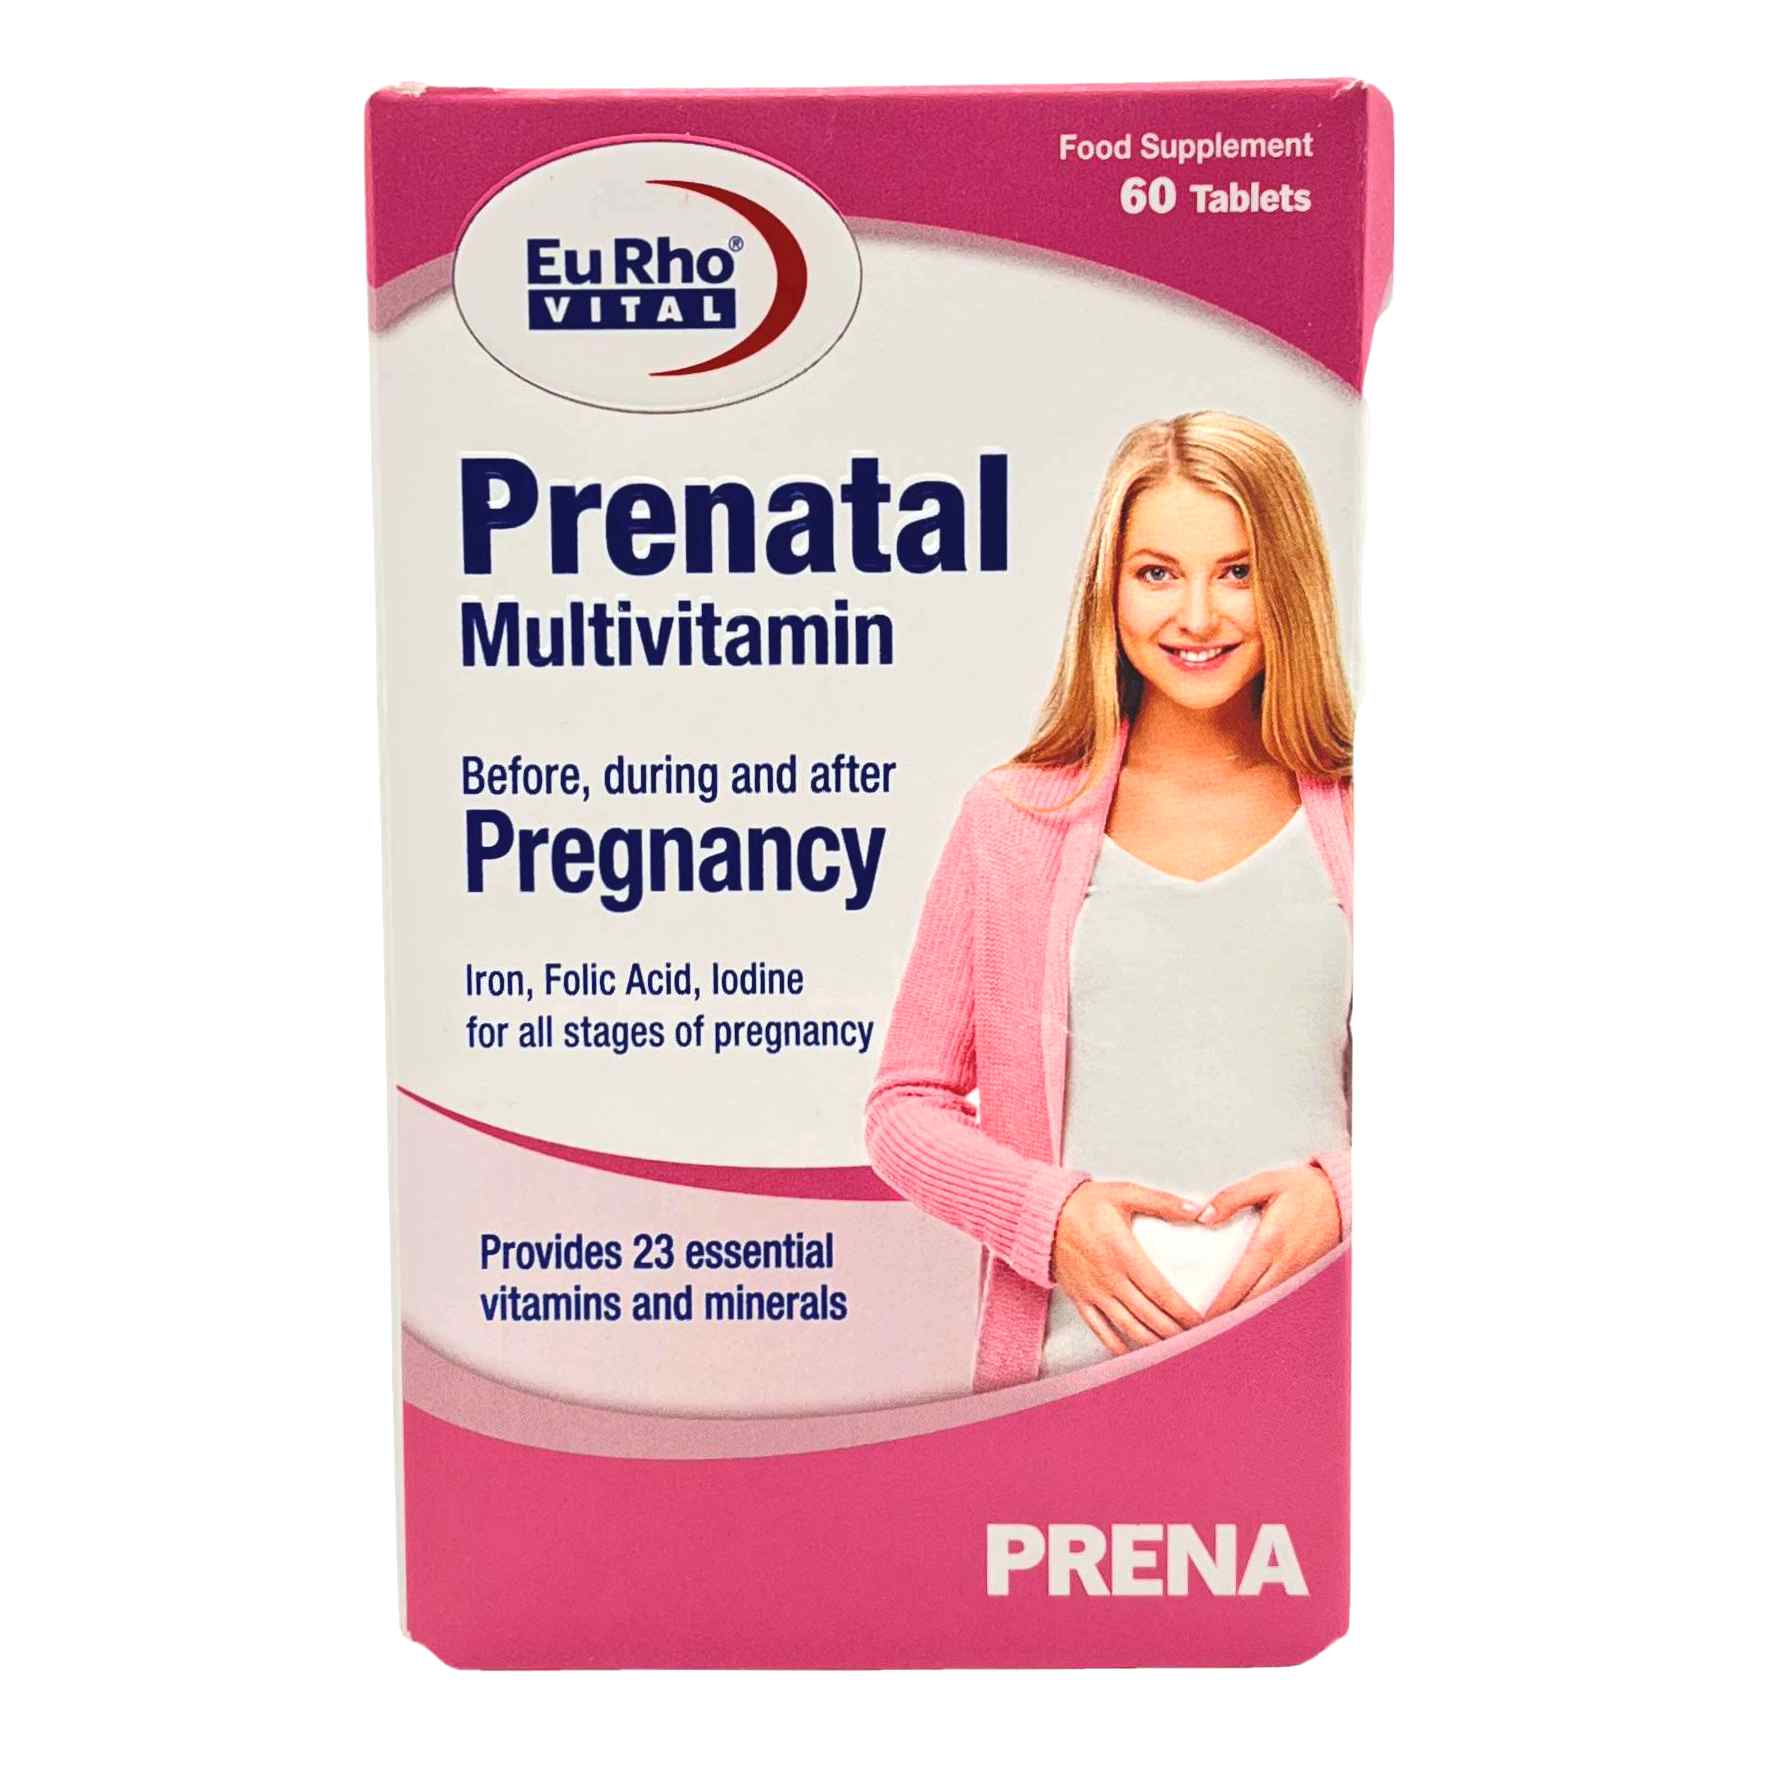 قرص پریناتال مولتی ویتامین ویژه زنان باردار پرگننسی یوروویتال EuRho Vital Prenatal